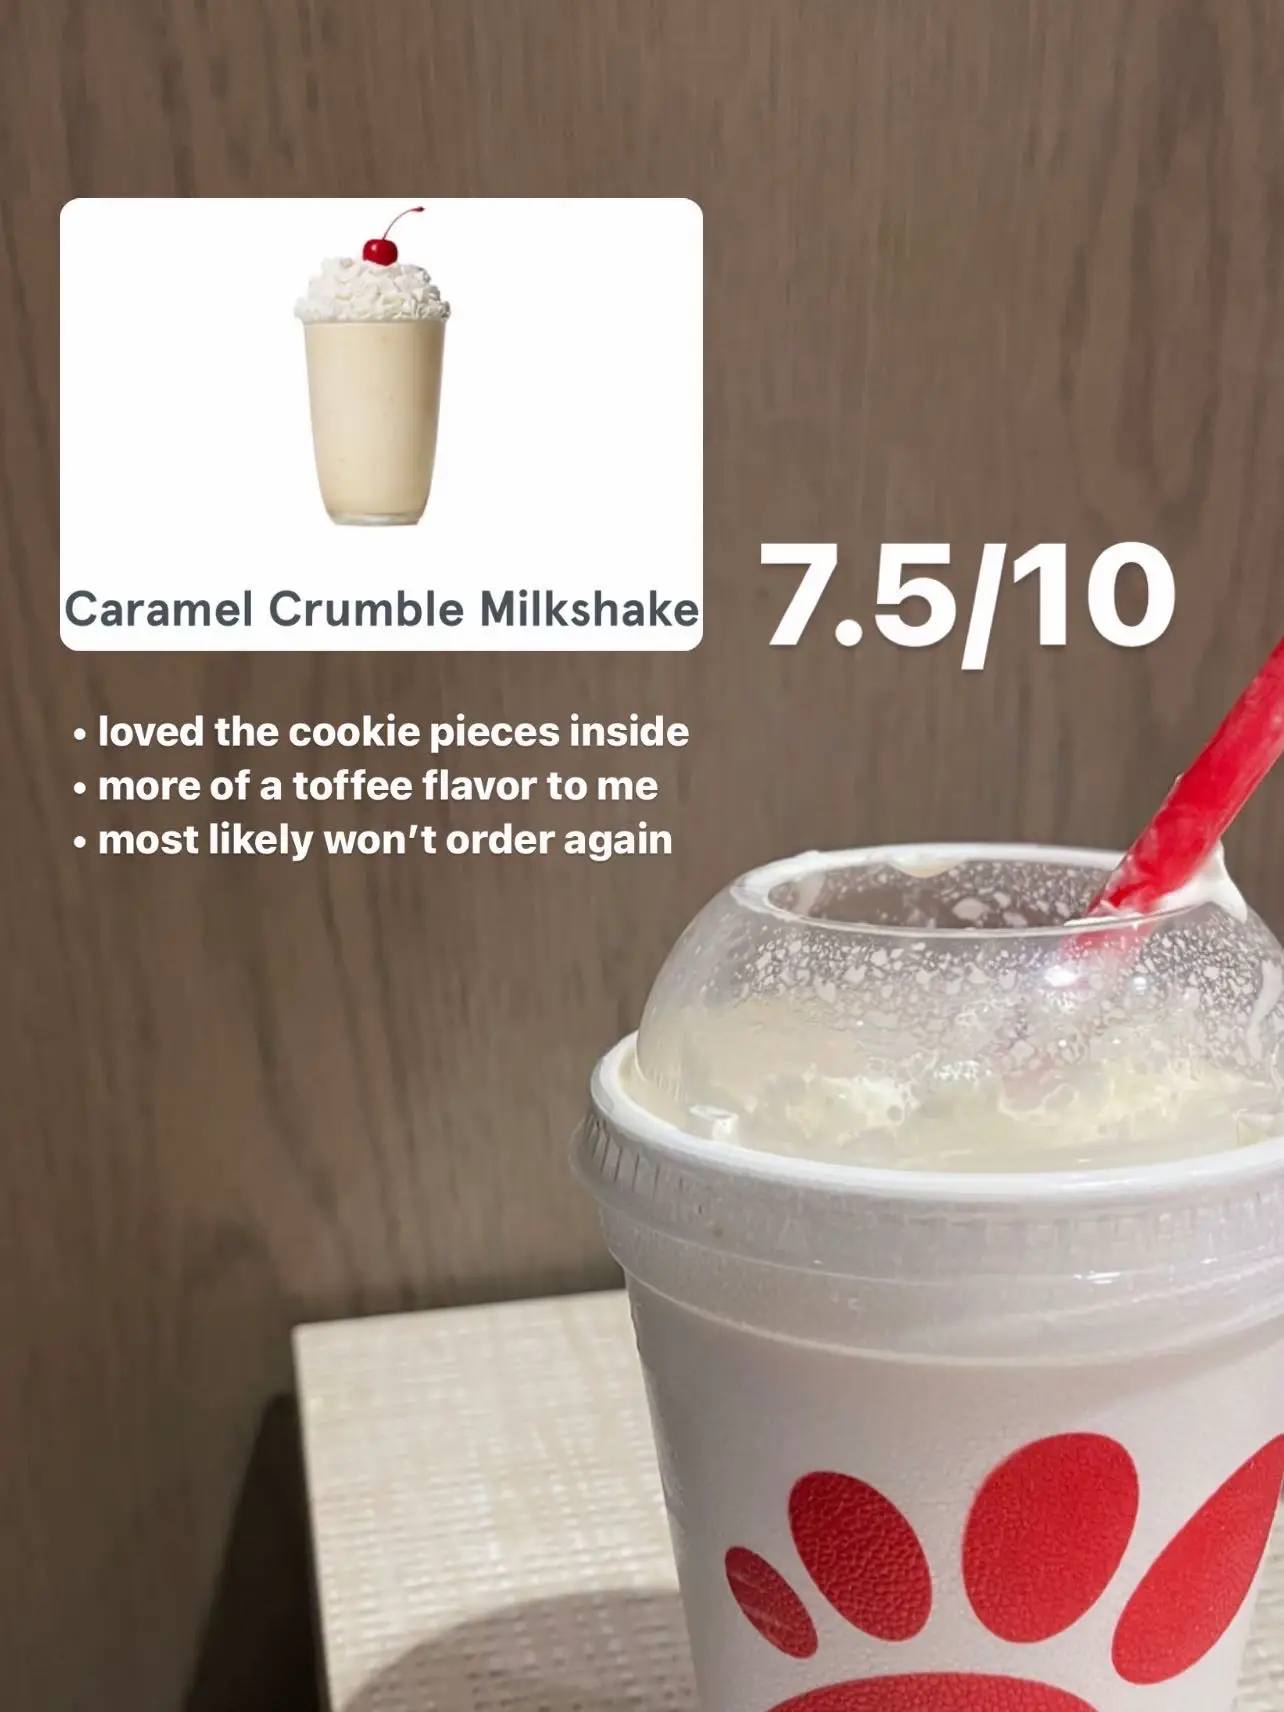 Caramel Crumble Milkshake, No longer available